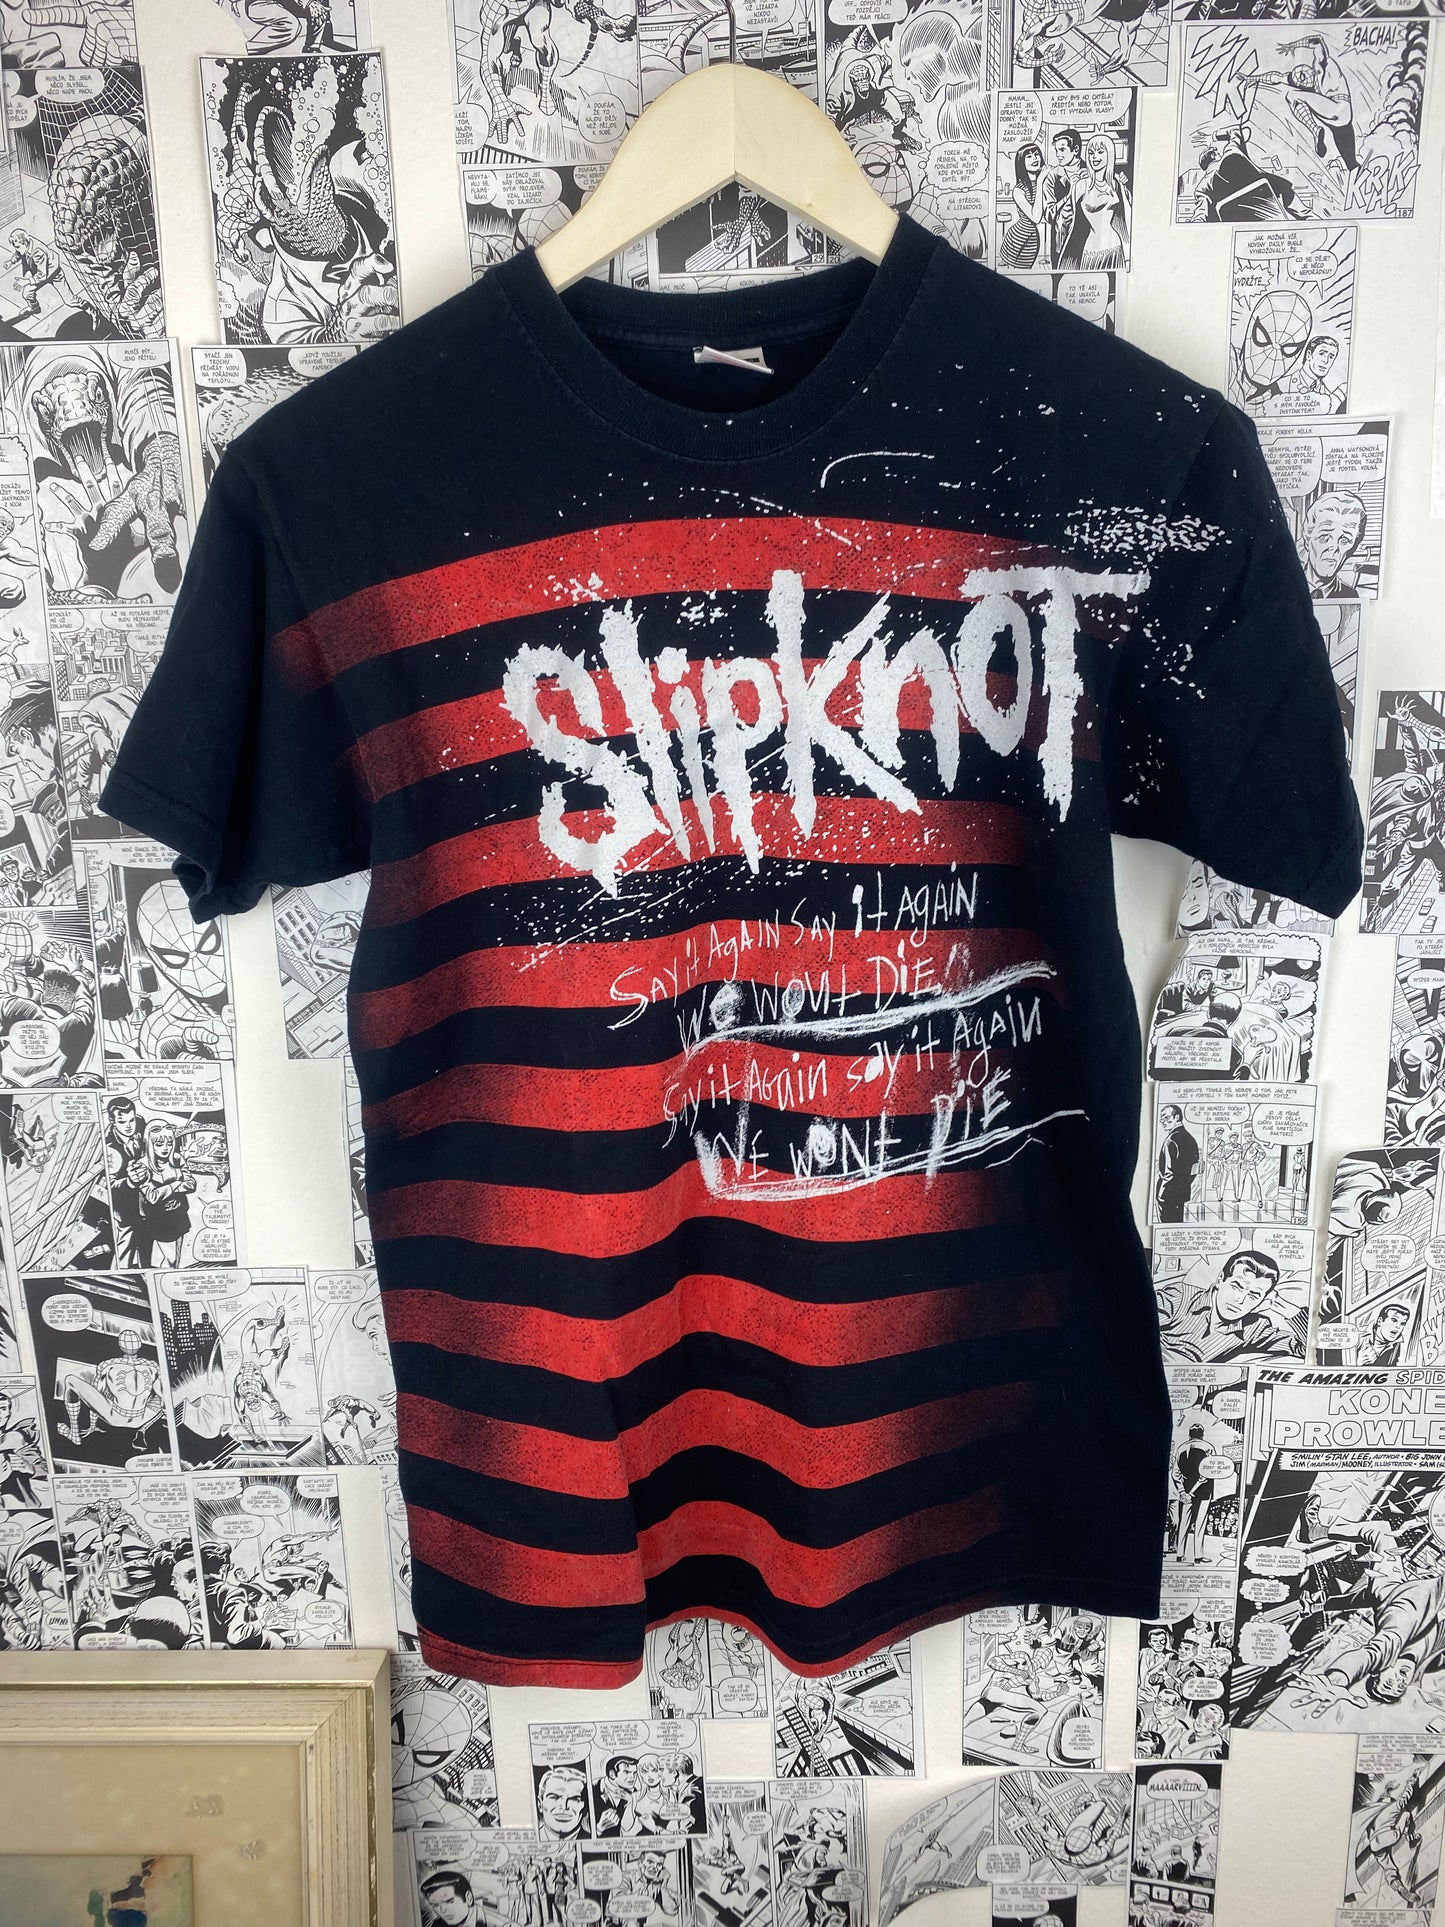 Vintage Slipknot “We Won’t Die” 00s t-shirt - size S